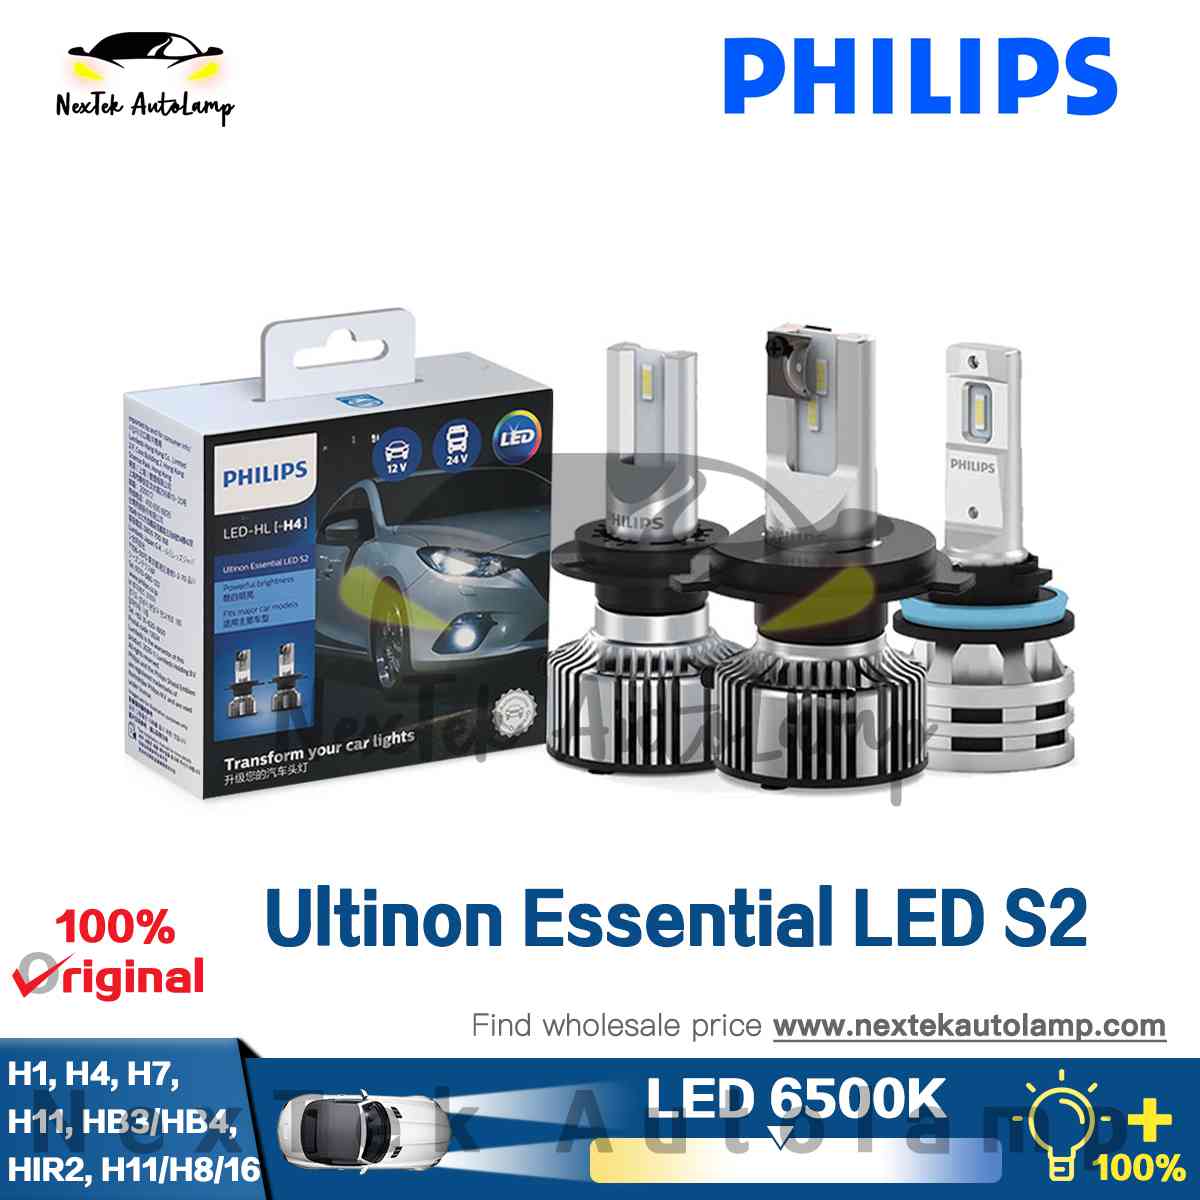 Philips New Ultinon Essential LED S2 H1 H4 H7 H11 HB3/HB4 HIR2 Headlight  Fog Lamp Car Hi/lo Beam 6500K